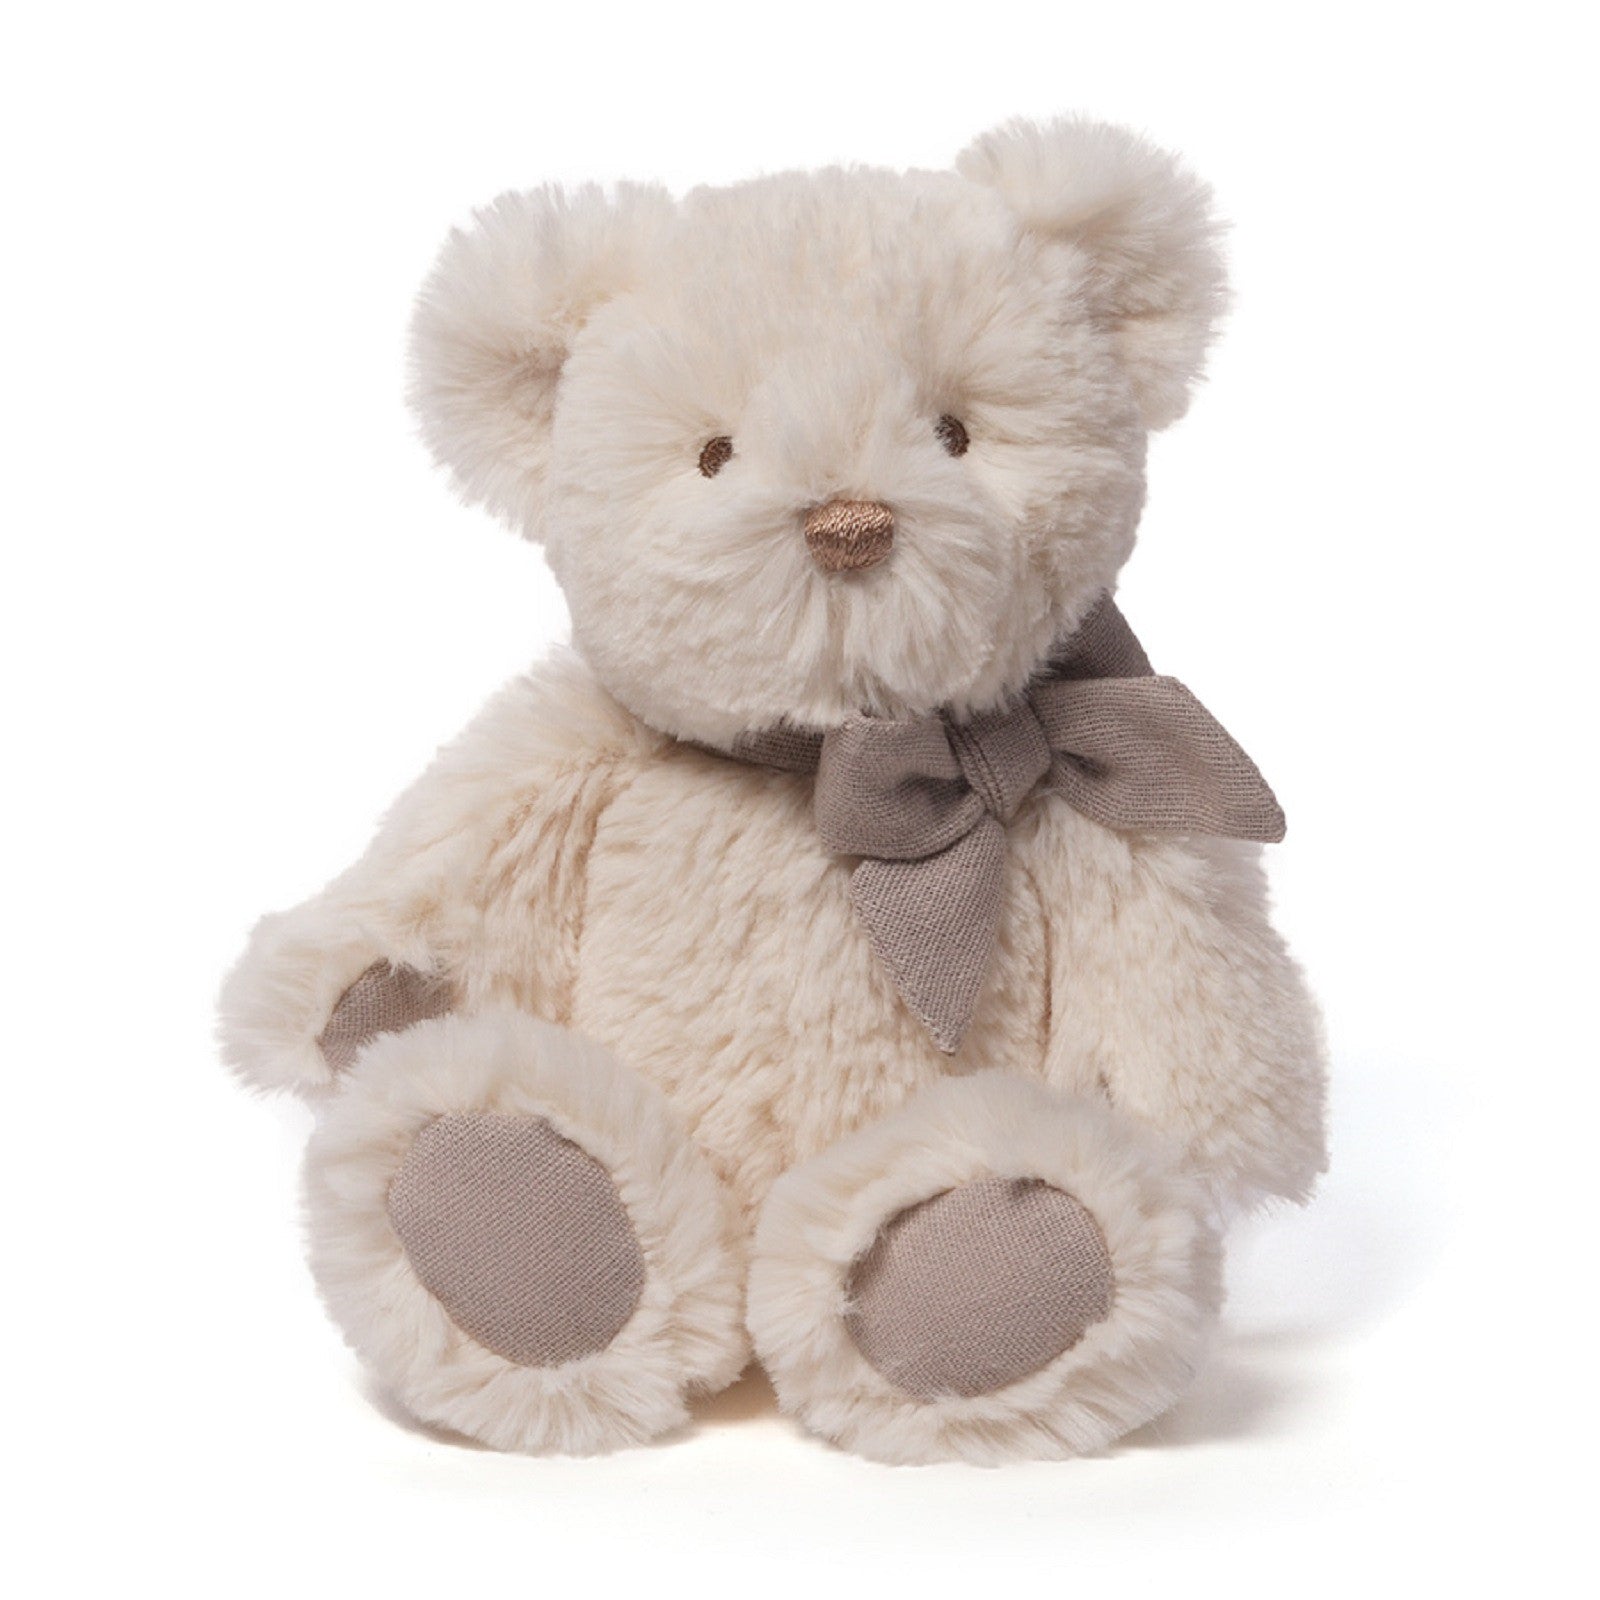 Baby Gund - Amadine Teddy Bear Chime - 7"